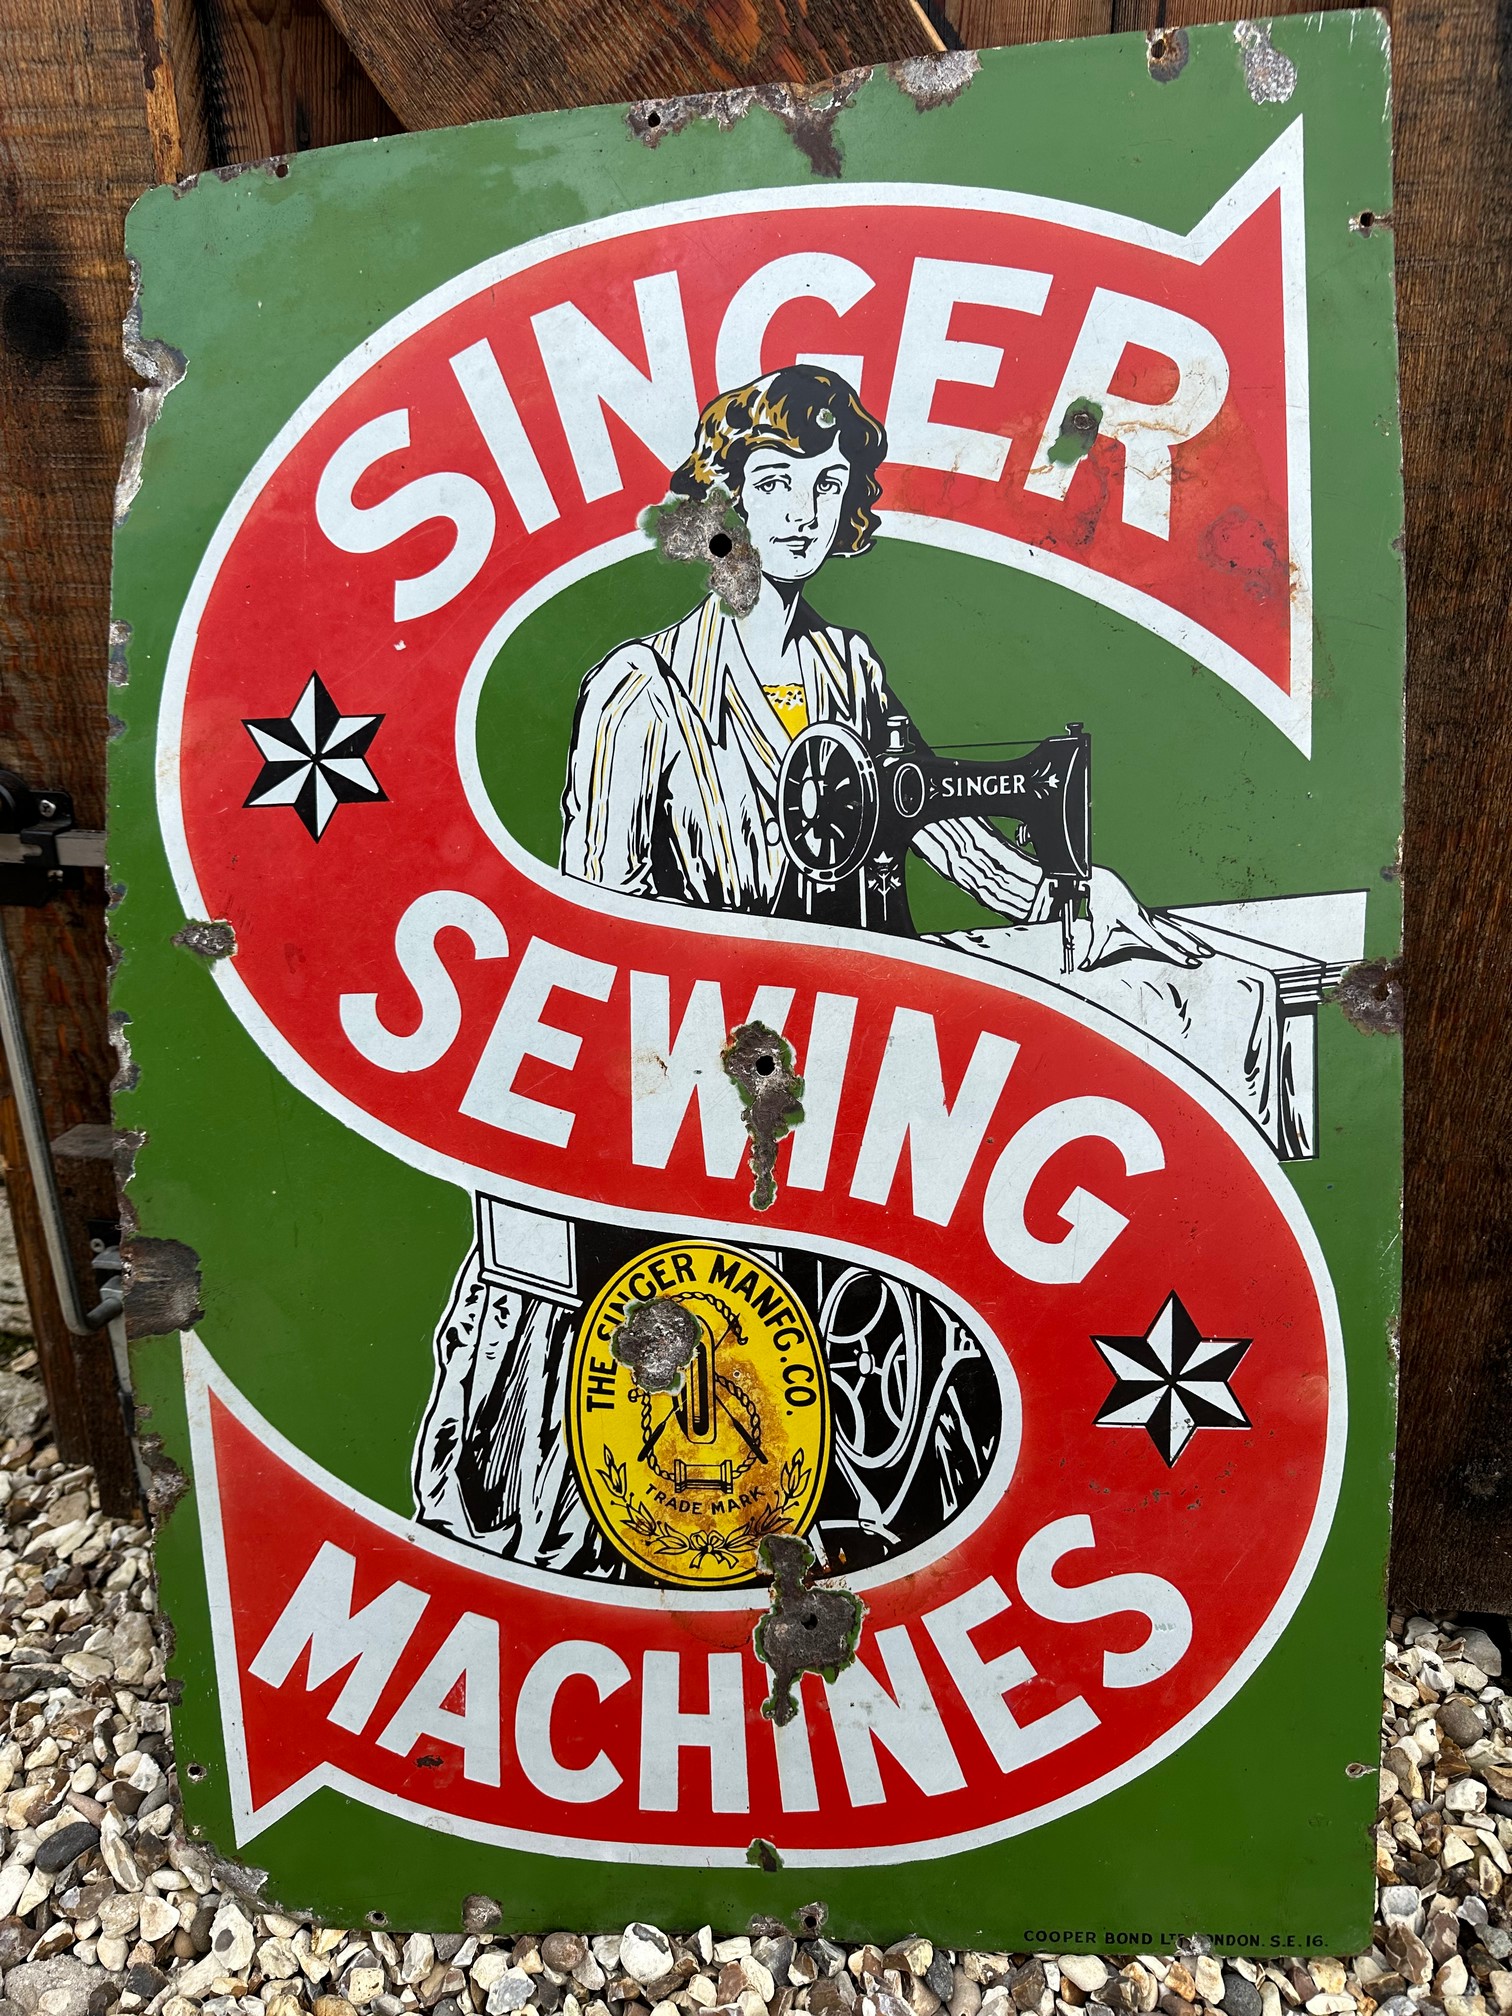 A Singer Sewing Machines enamel advertising sign by Cooper Bond Ltd. London SE16, 24 x 36".